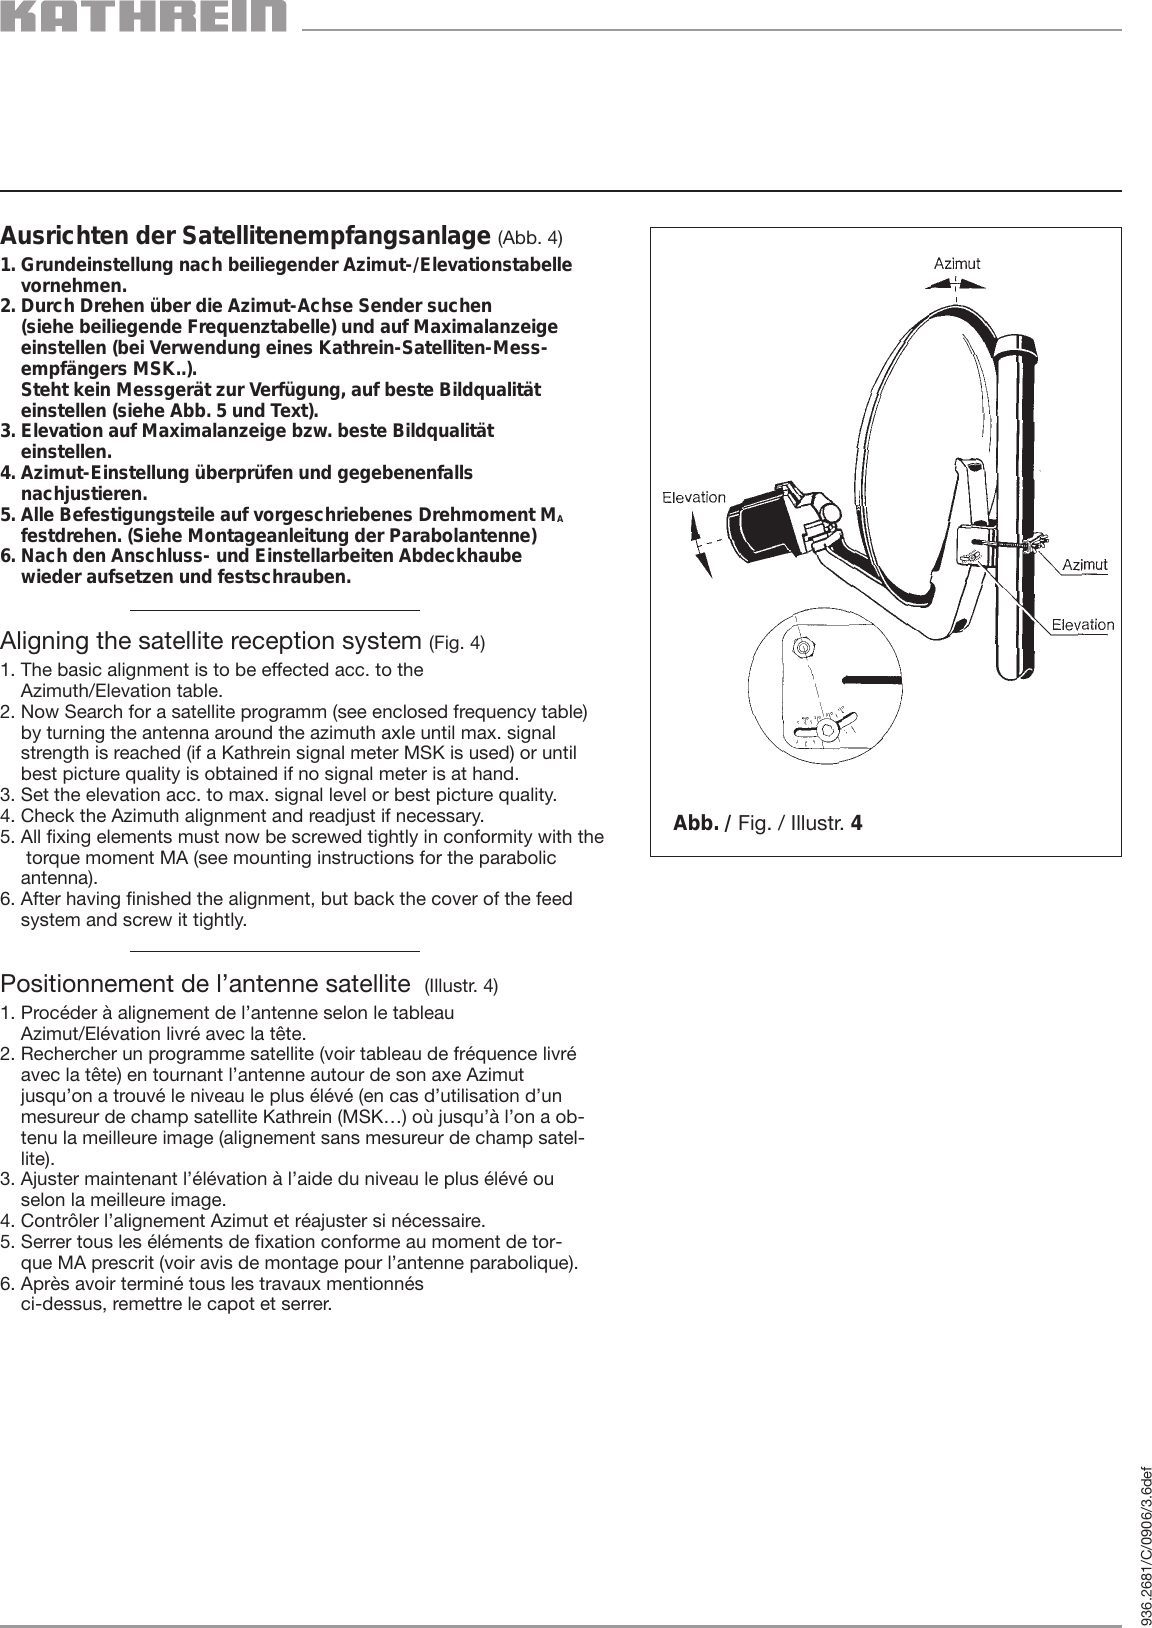 Page 3 of 6 - Kathrein Kathrein-Universal-Feed-Systems-Uas-177-Users-Manual- 9362681c, Universal-Speisesystem Mit 1 Ausgang UAS 177  Kathrein-universal-feed-systems-uas-177-users-manual